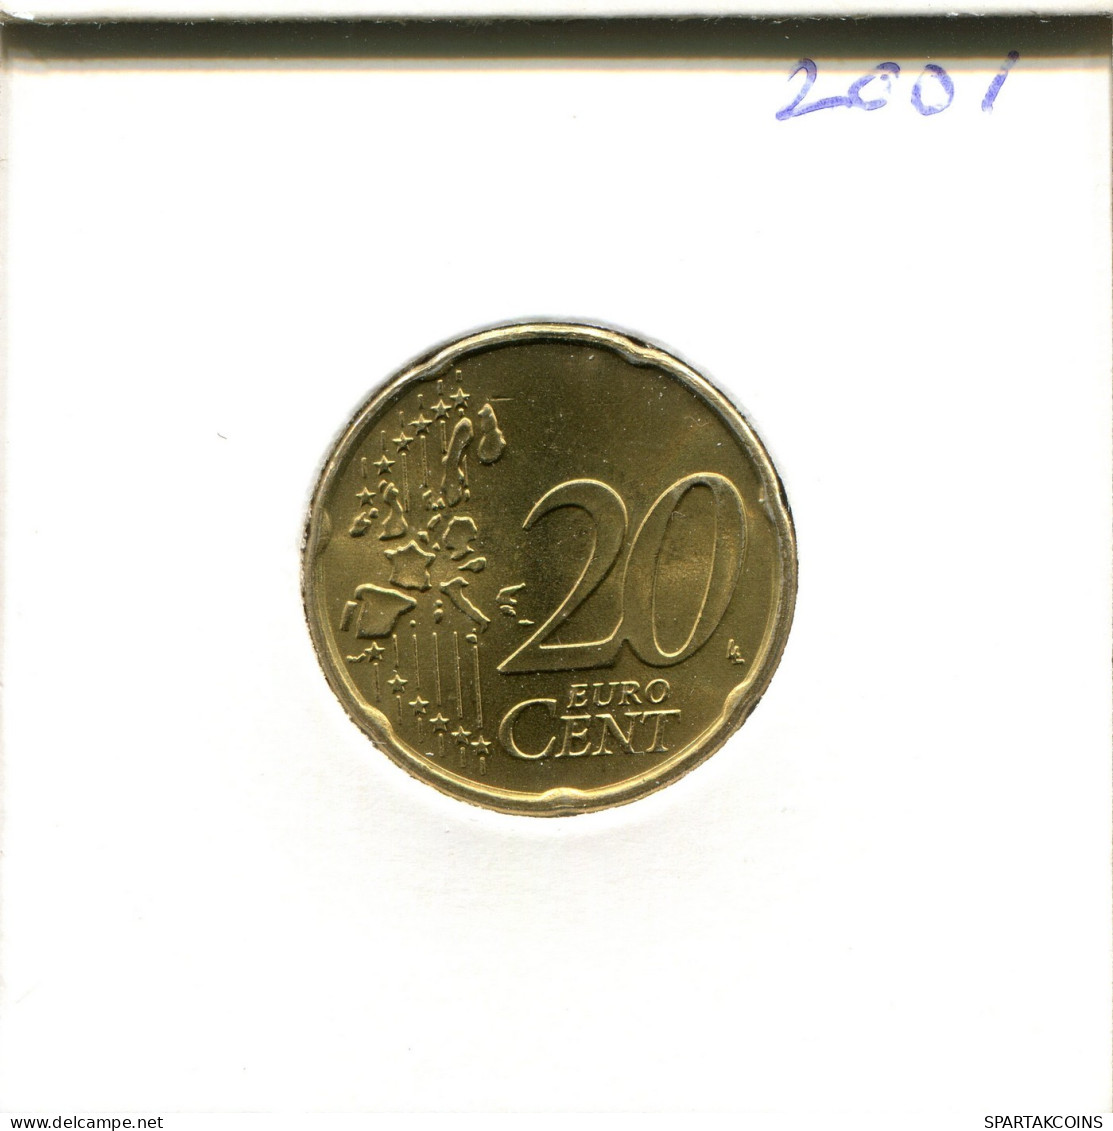 20 EURO CENTS 2001 NIEDERLANDE NETHERLANDS Münze #EU275.D.A - Pays-Bas